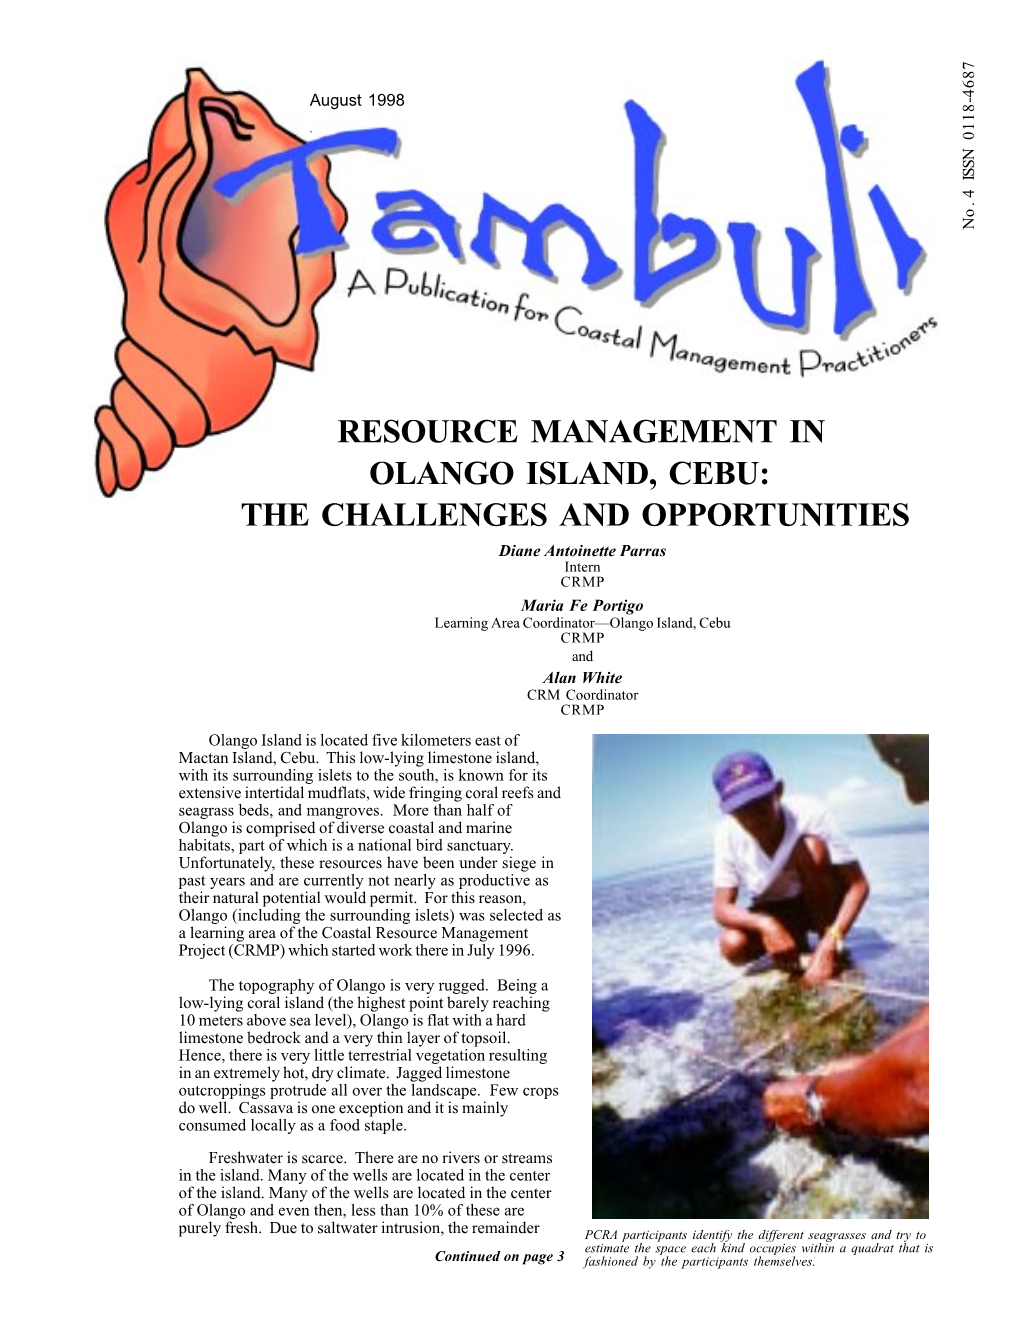 Resource Management in Olango Island